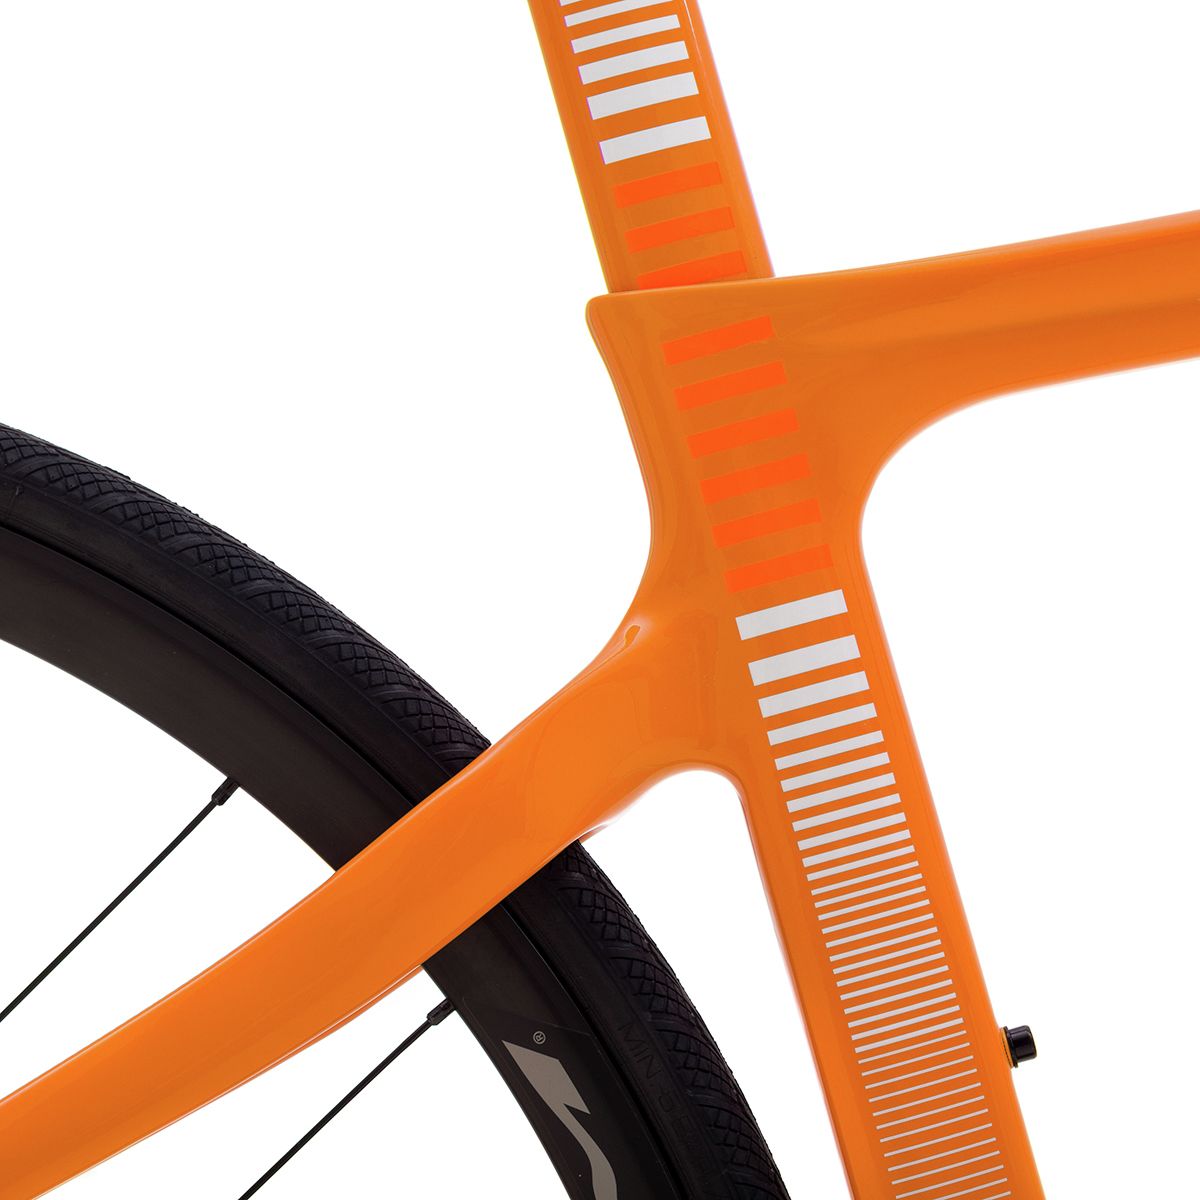 2018 Pinarello GAN Disk 105 Bike – Specs, Comparisons, Reviews